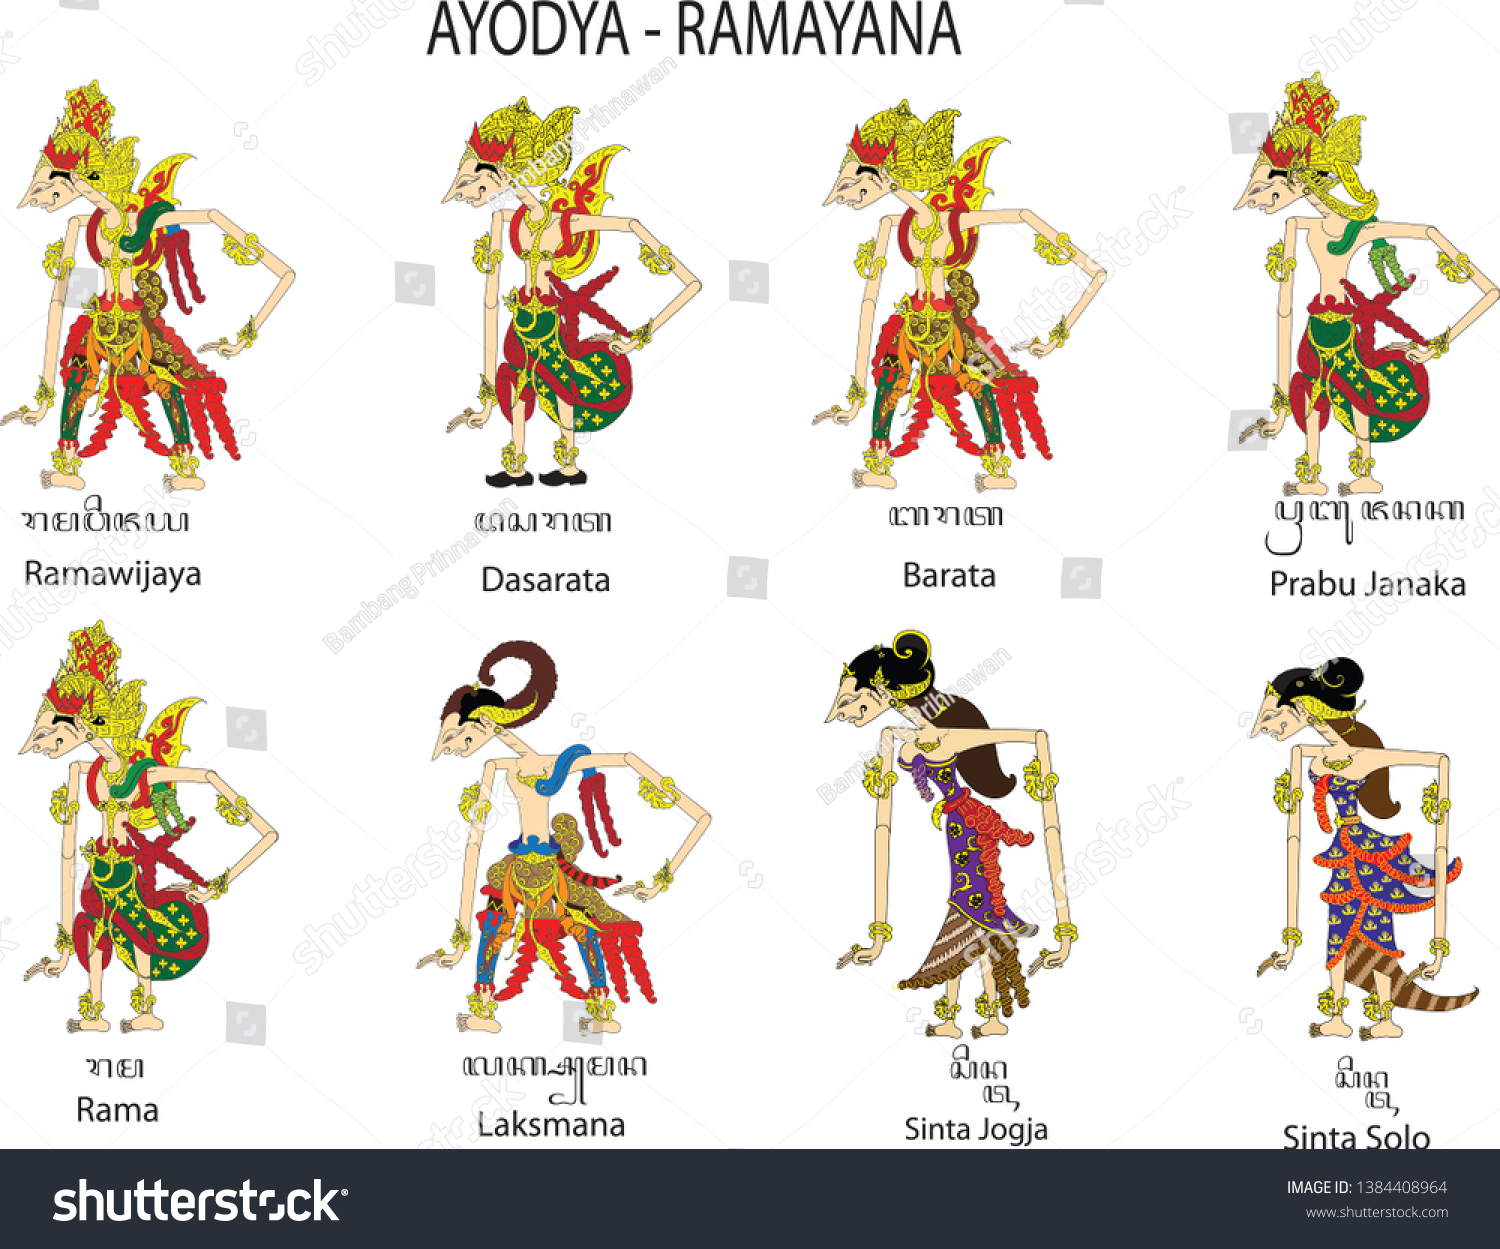 Wayang Ayodya Ramayana Rama Sinta Laksmana Royalty Free Stock Image